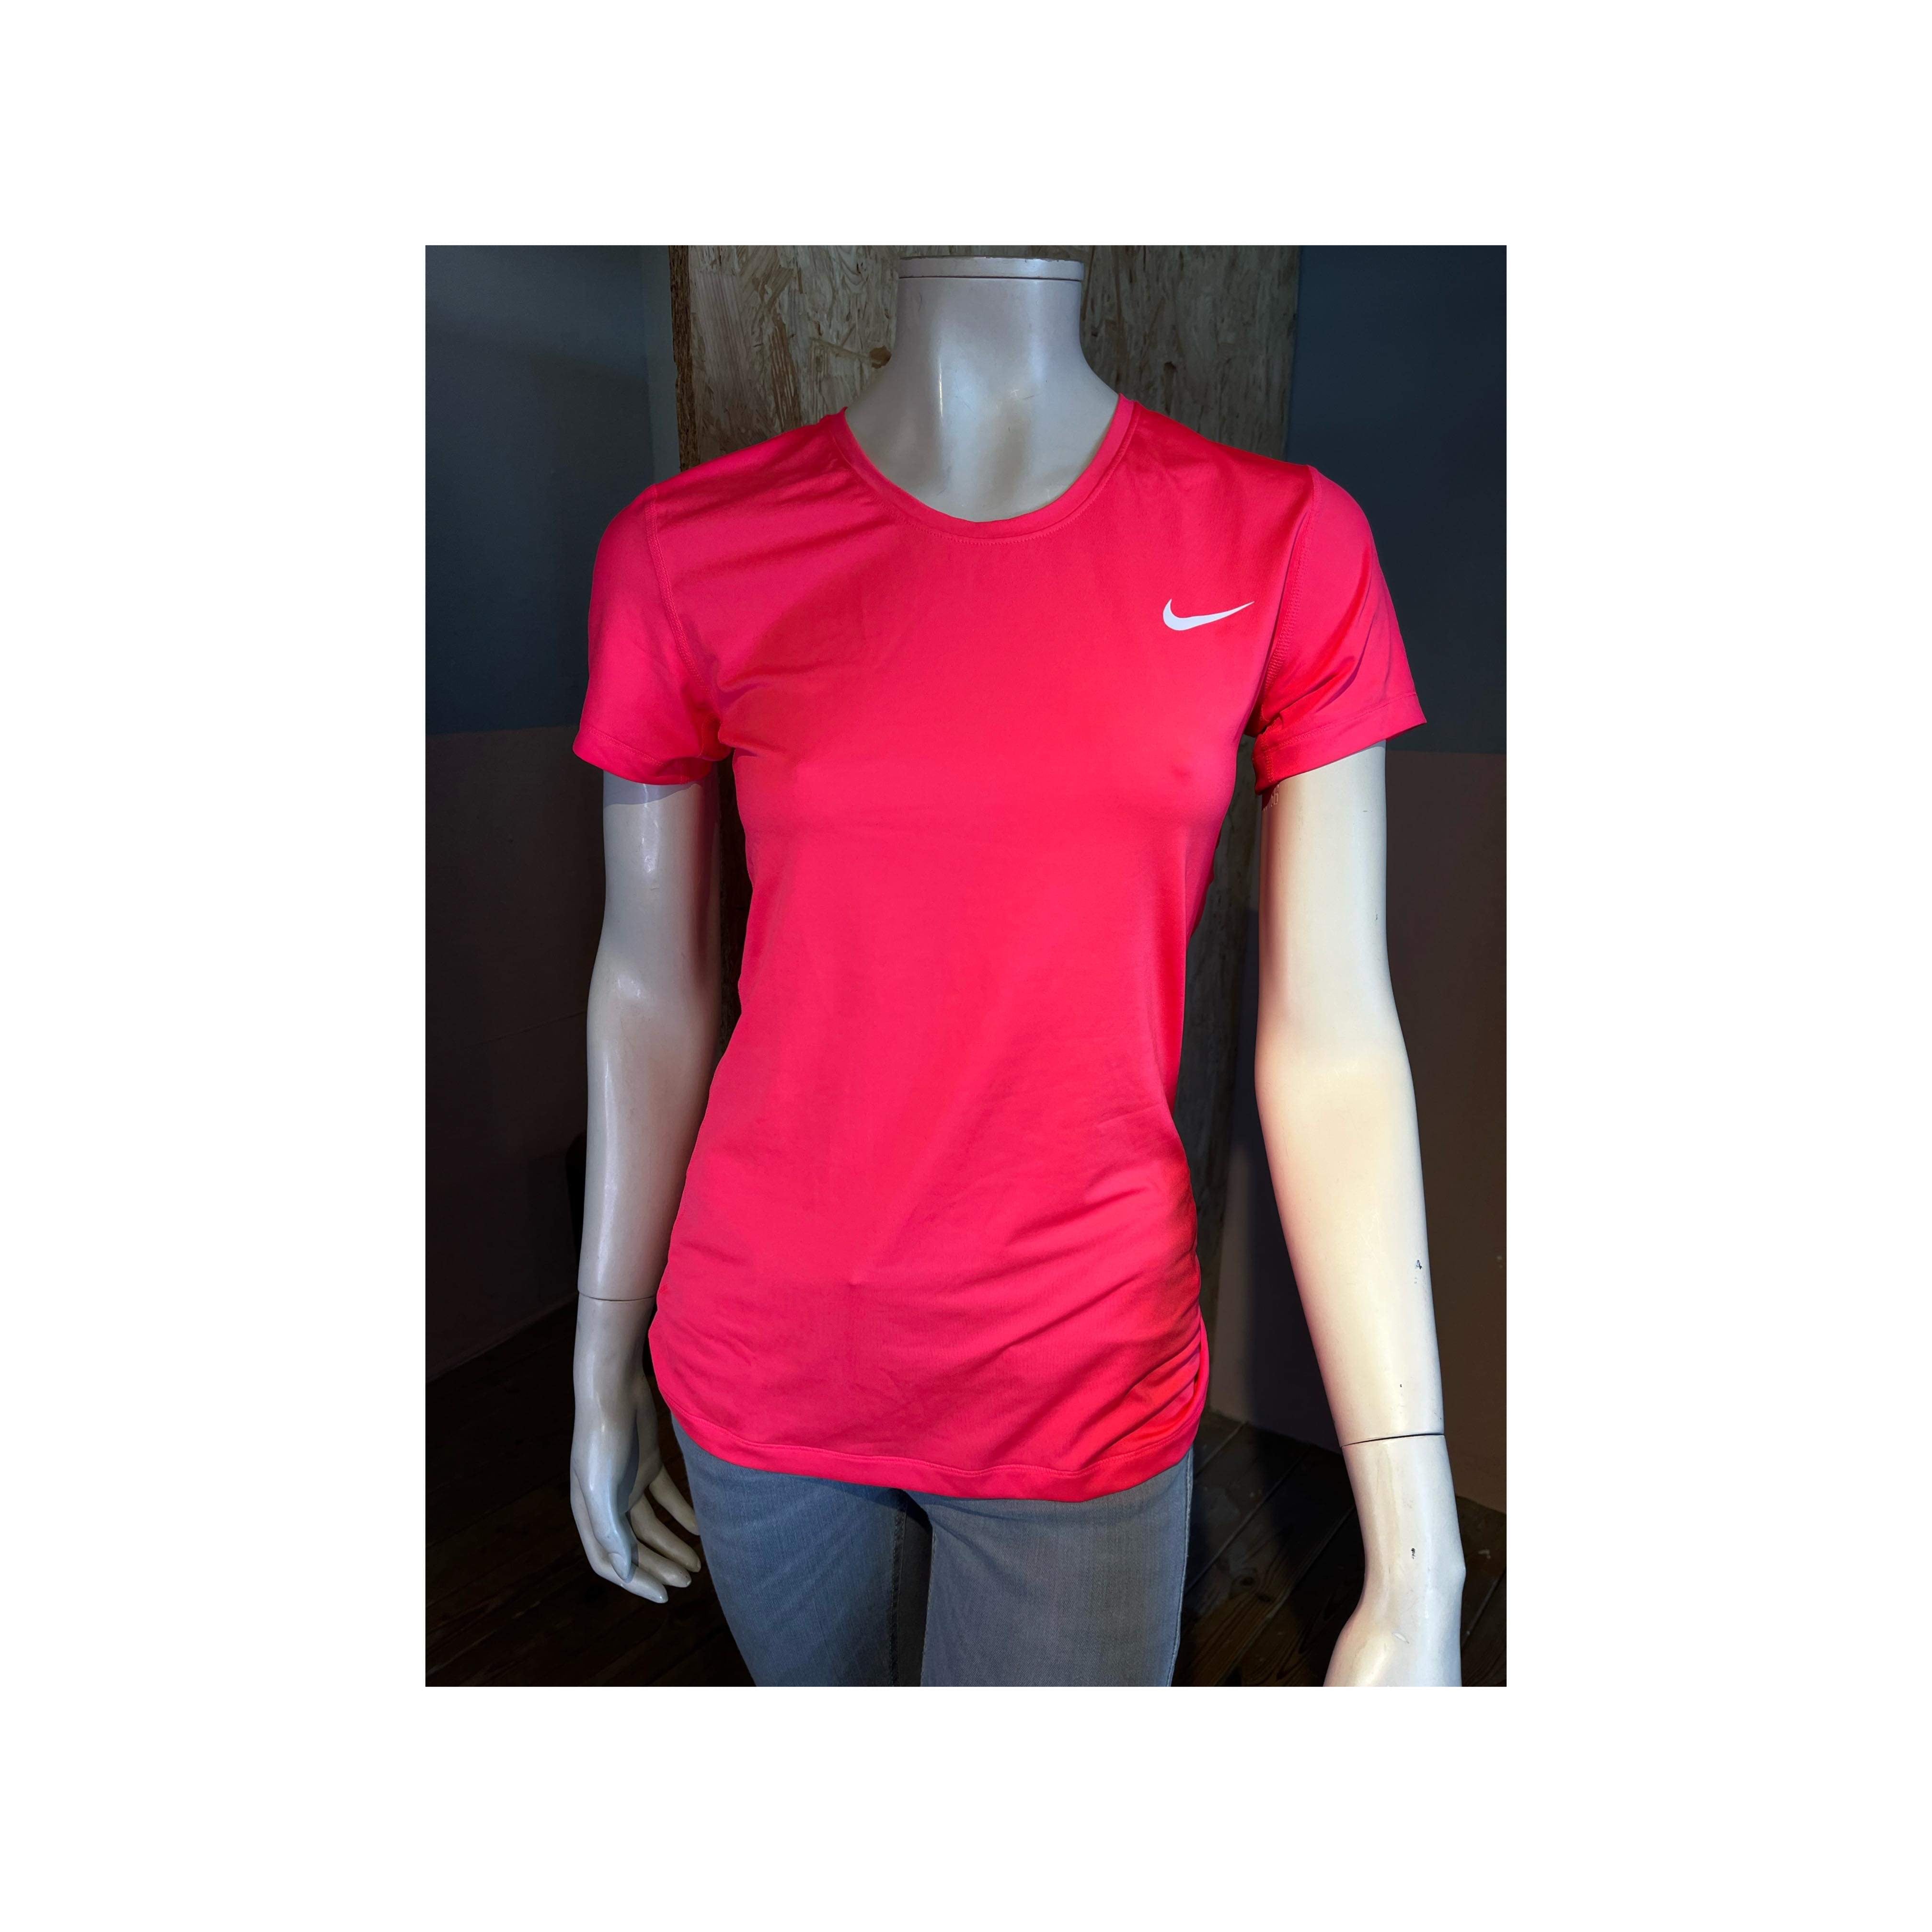 Nike - T-shirt - Size: L